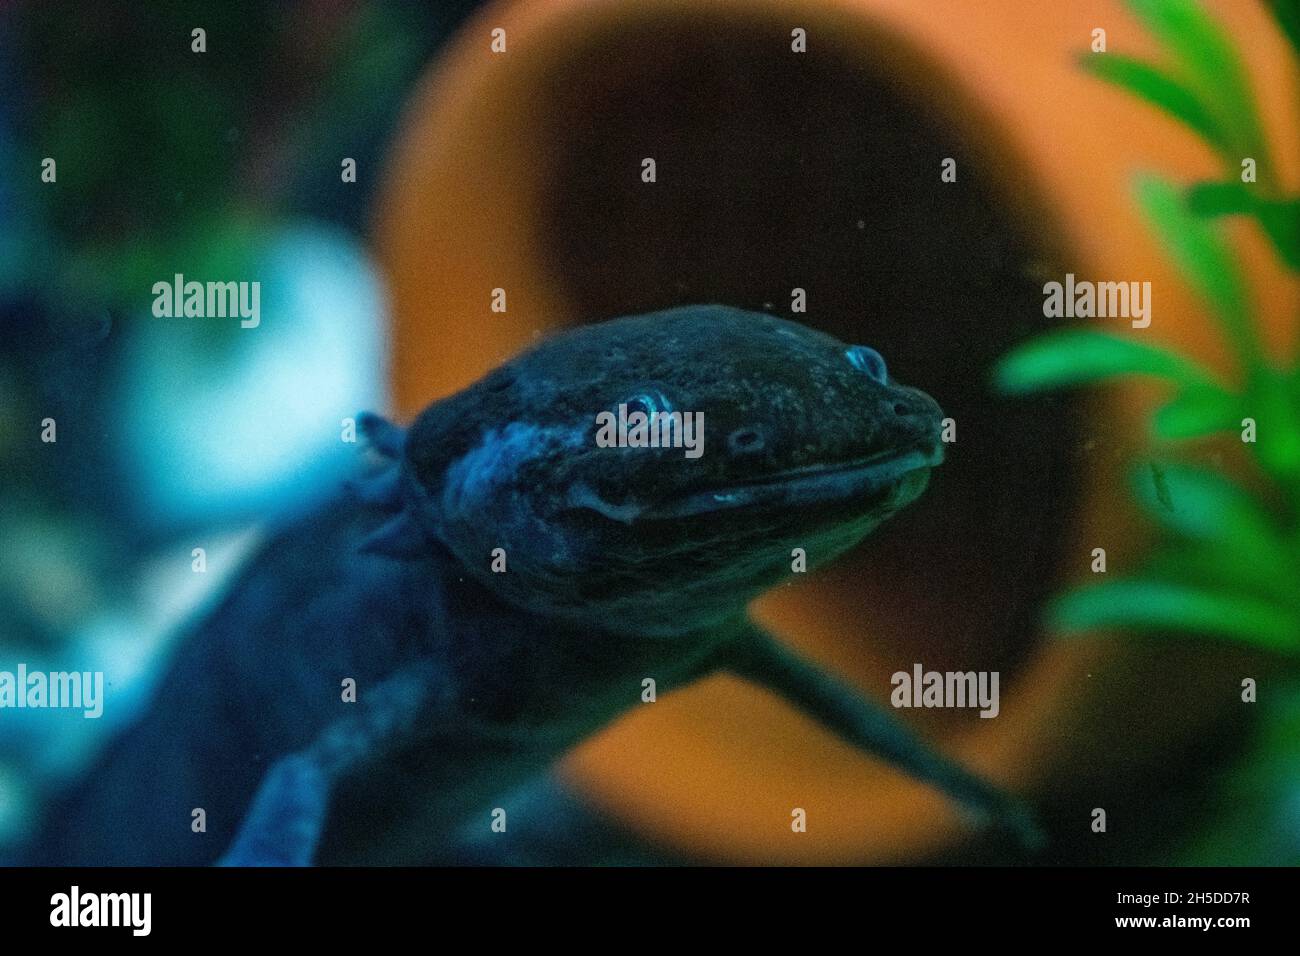 Closeup of the Ambystoma mexicanum. Axolotl, Mexican walking fish. Stock Photo